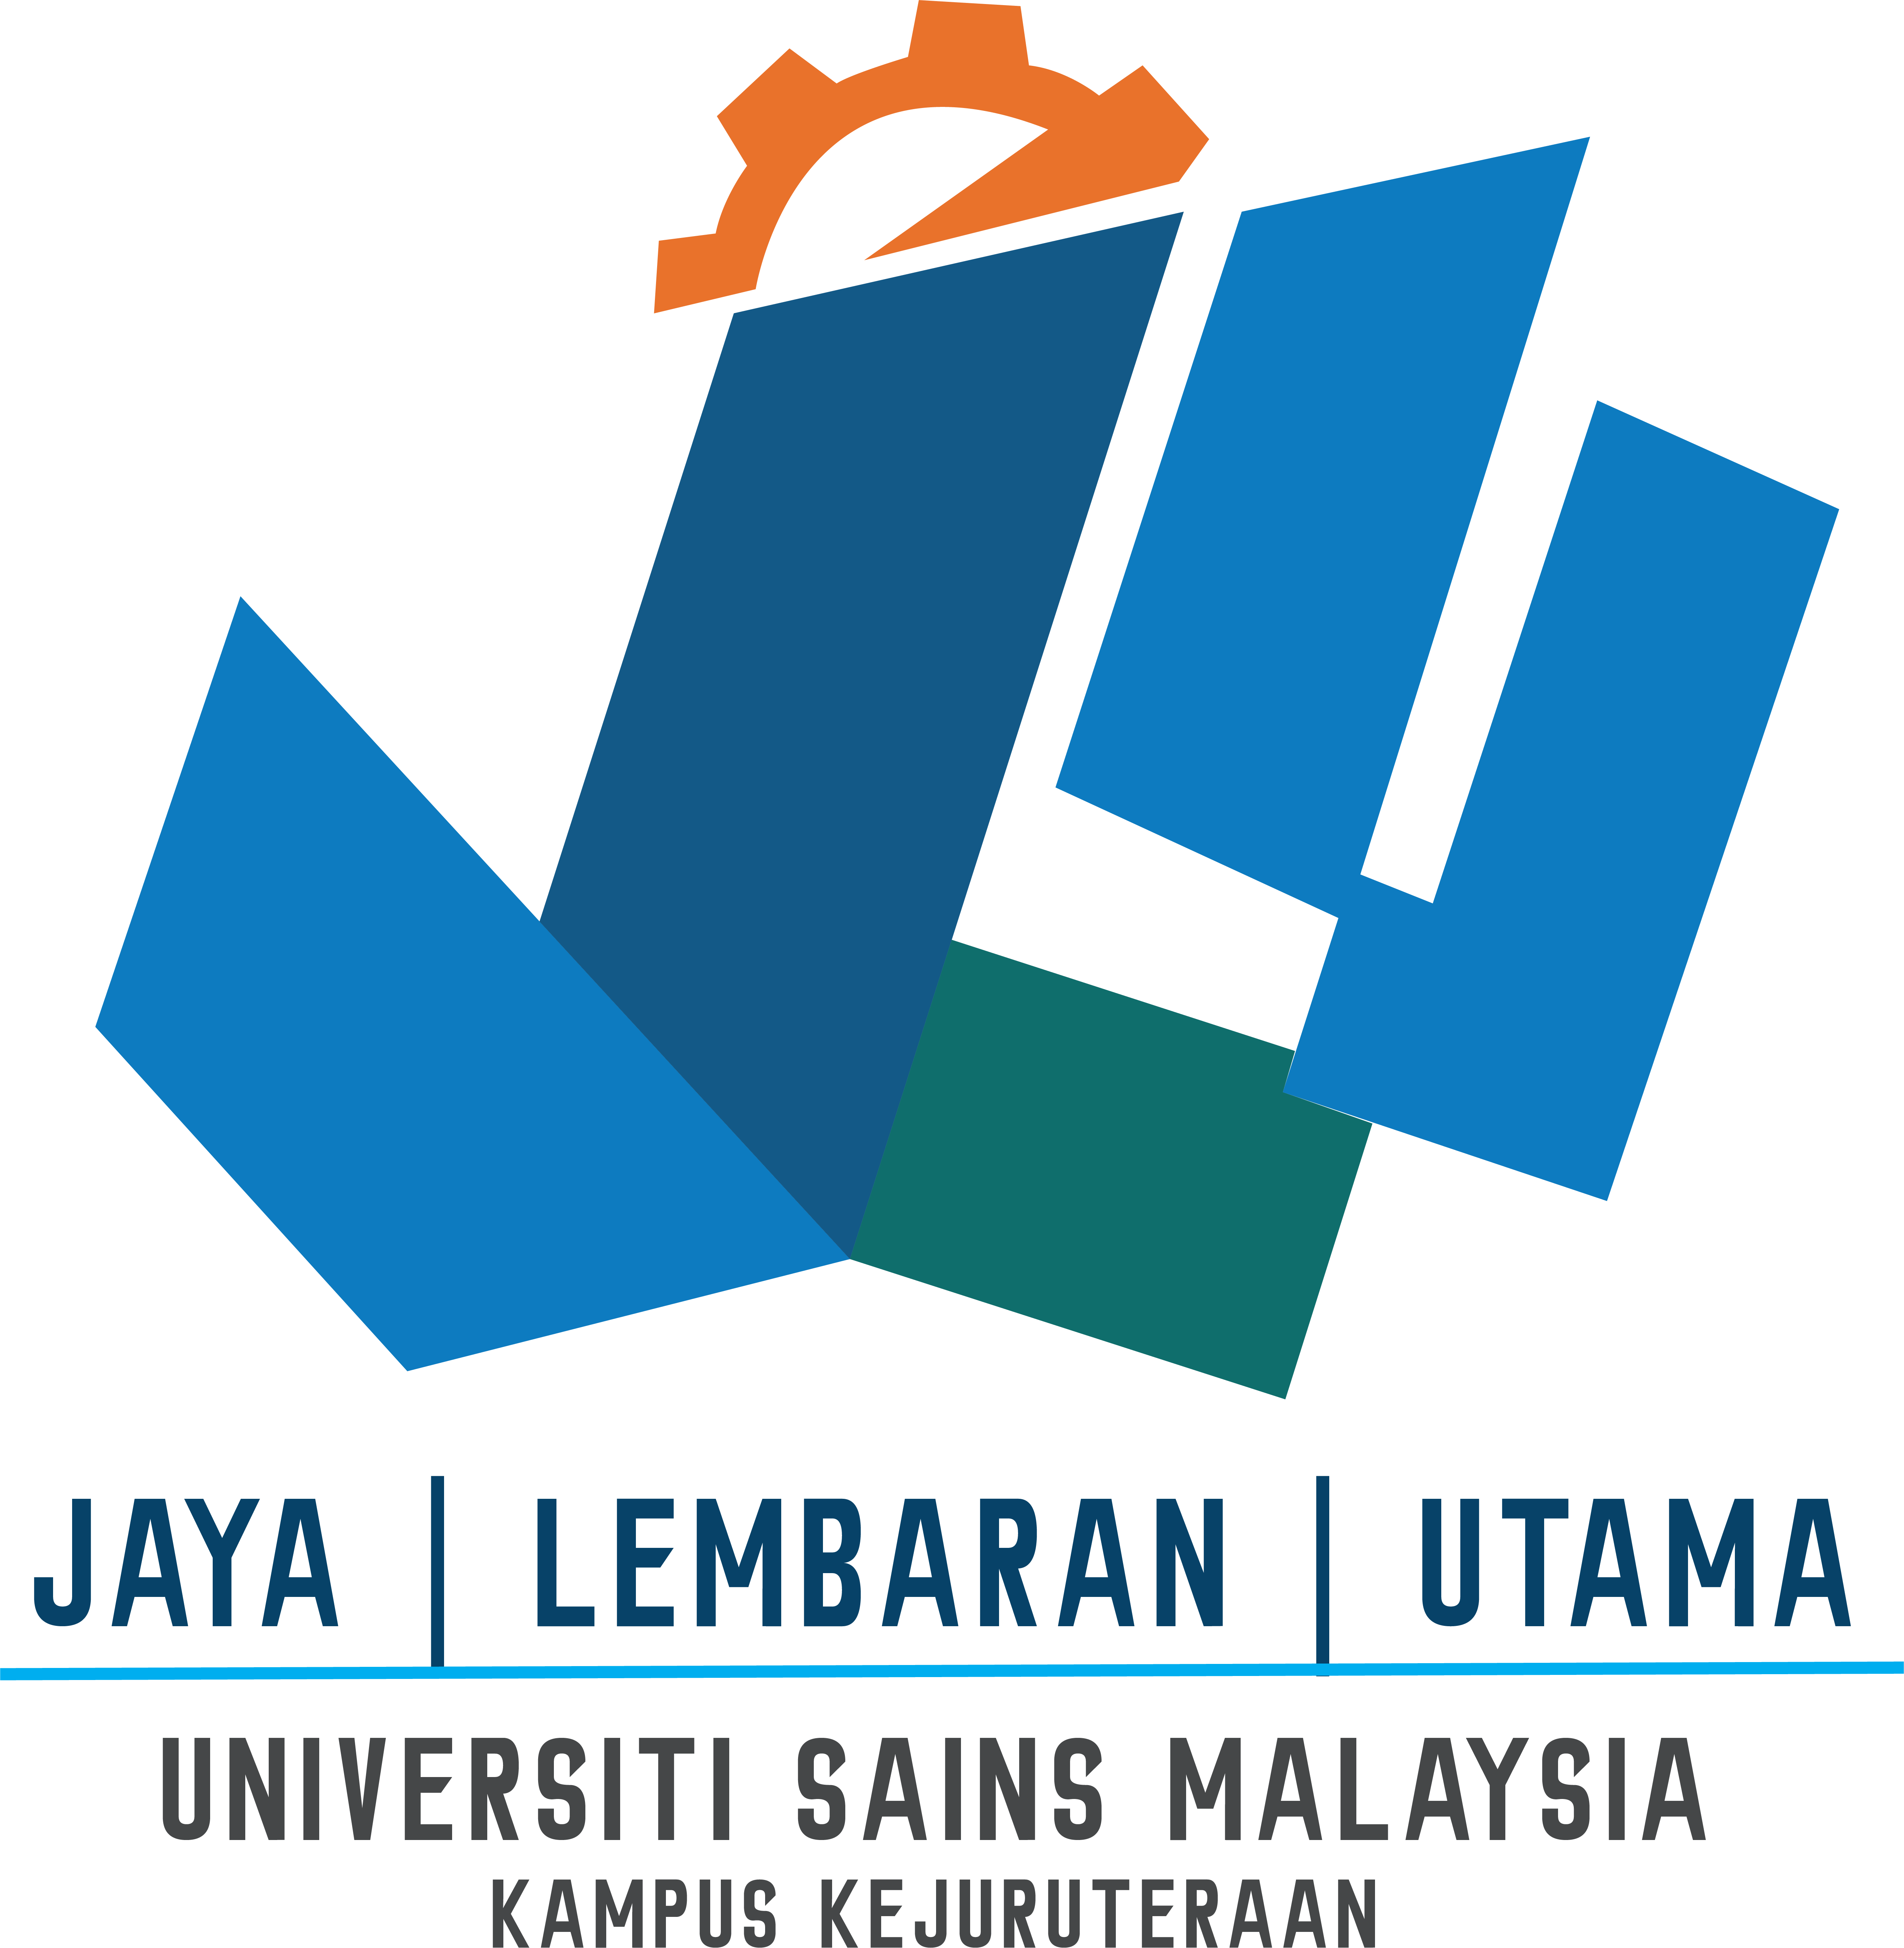 Logo_JLU.png - 333.34 kB